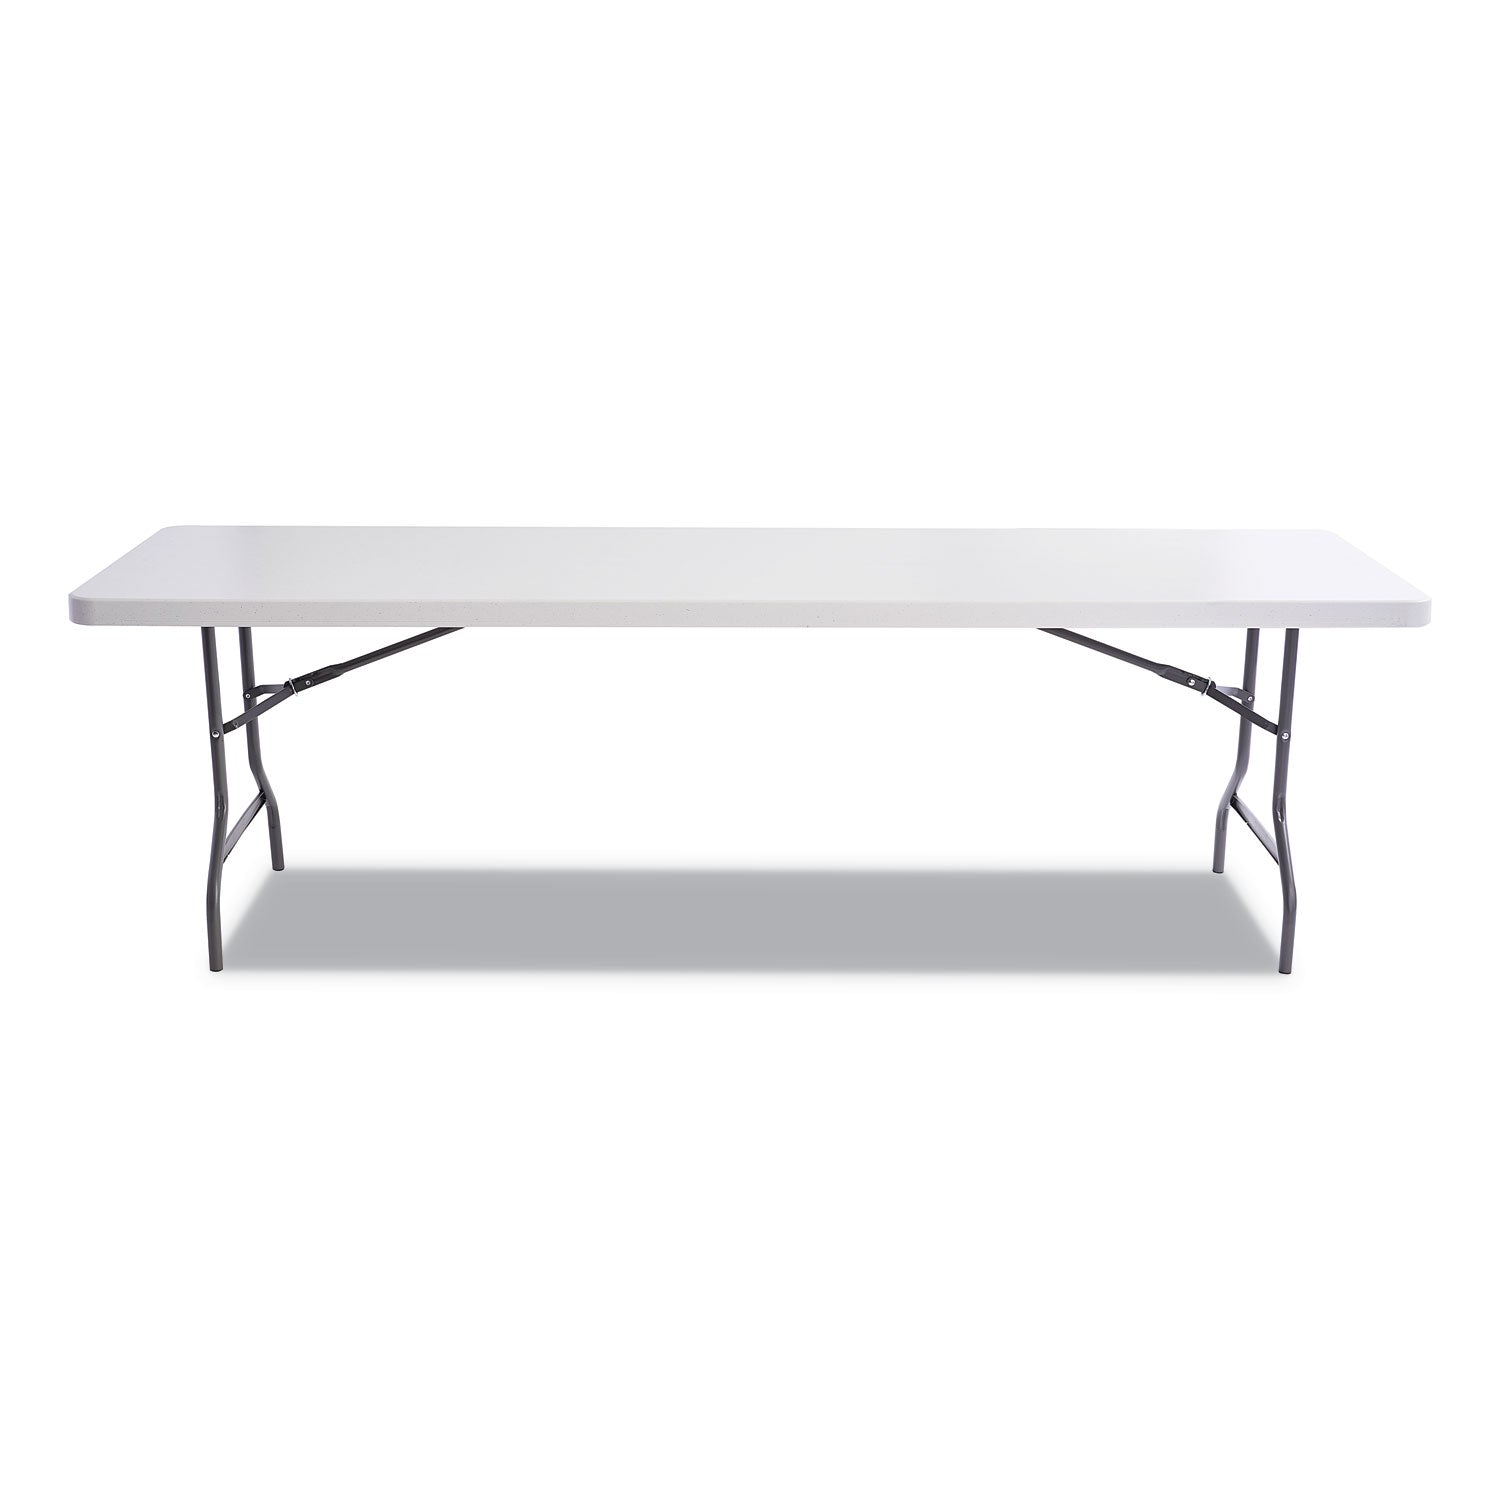 Resin Rectangular Folding Table, Square Edge, 96w x 30d x 29h, Platinum - 